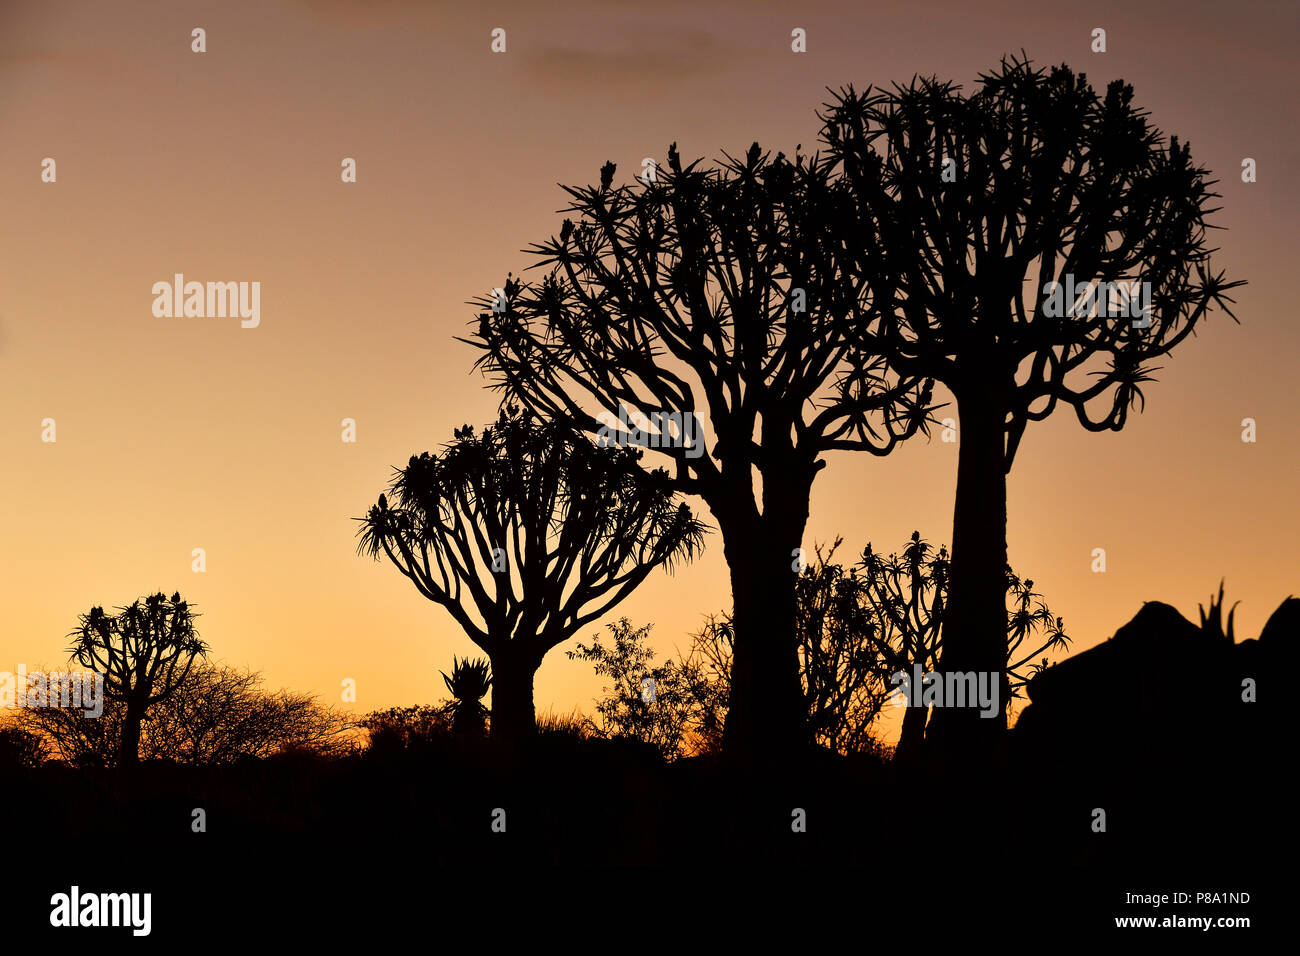 El carcaj tree (Aloe dichotoma), bosque, siluetas en el atardecer, Keetmanshoop, Karas, Namibia Foto de stock